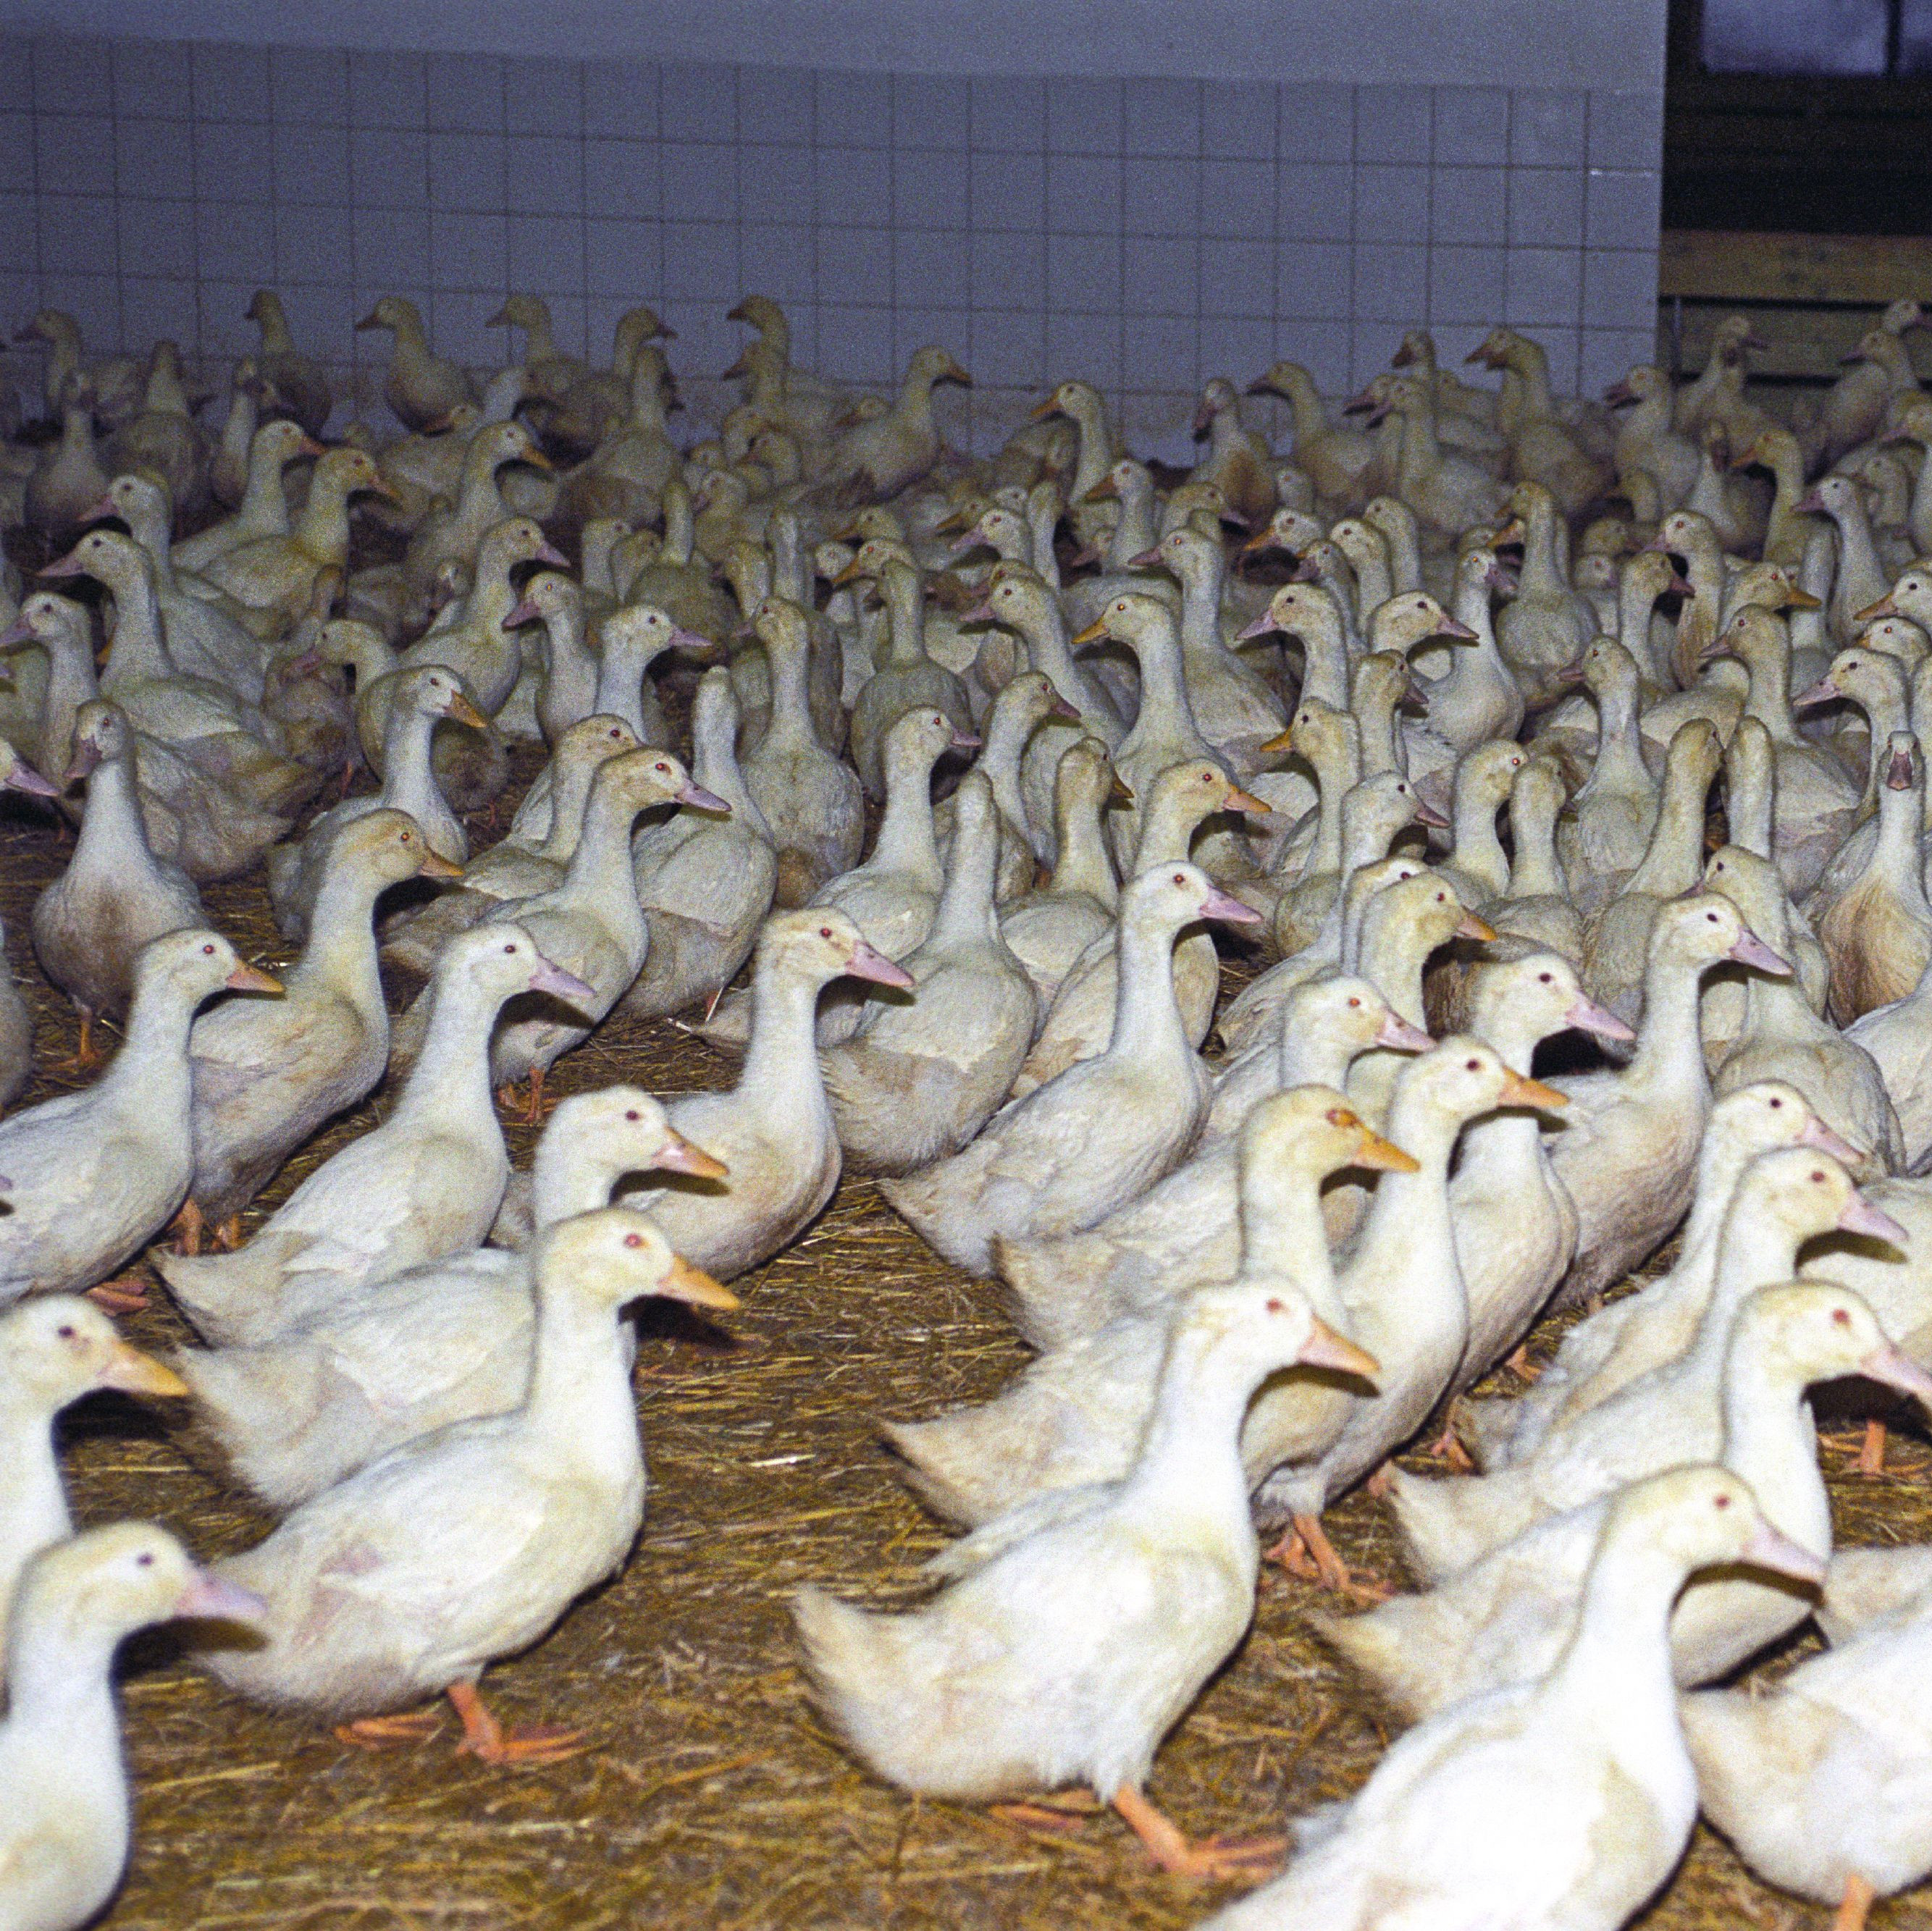 Many ducks on a farm